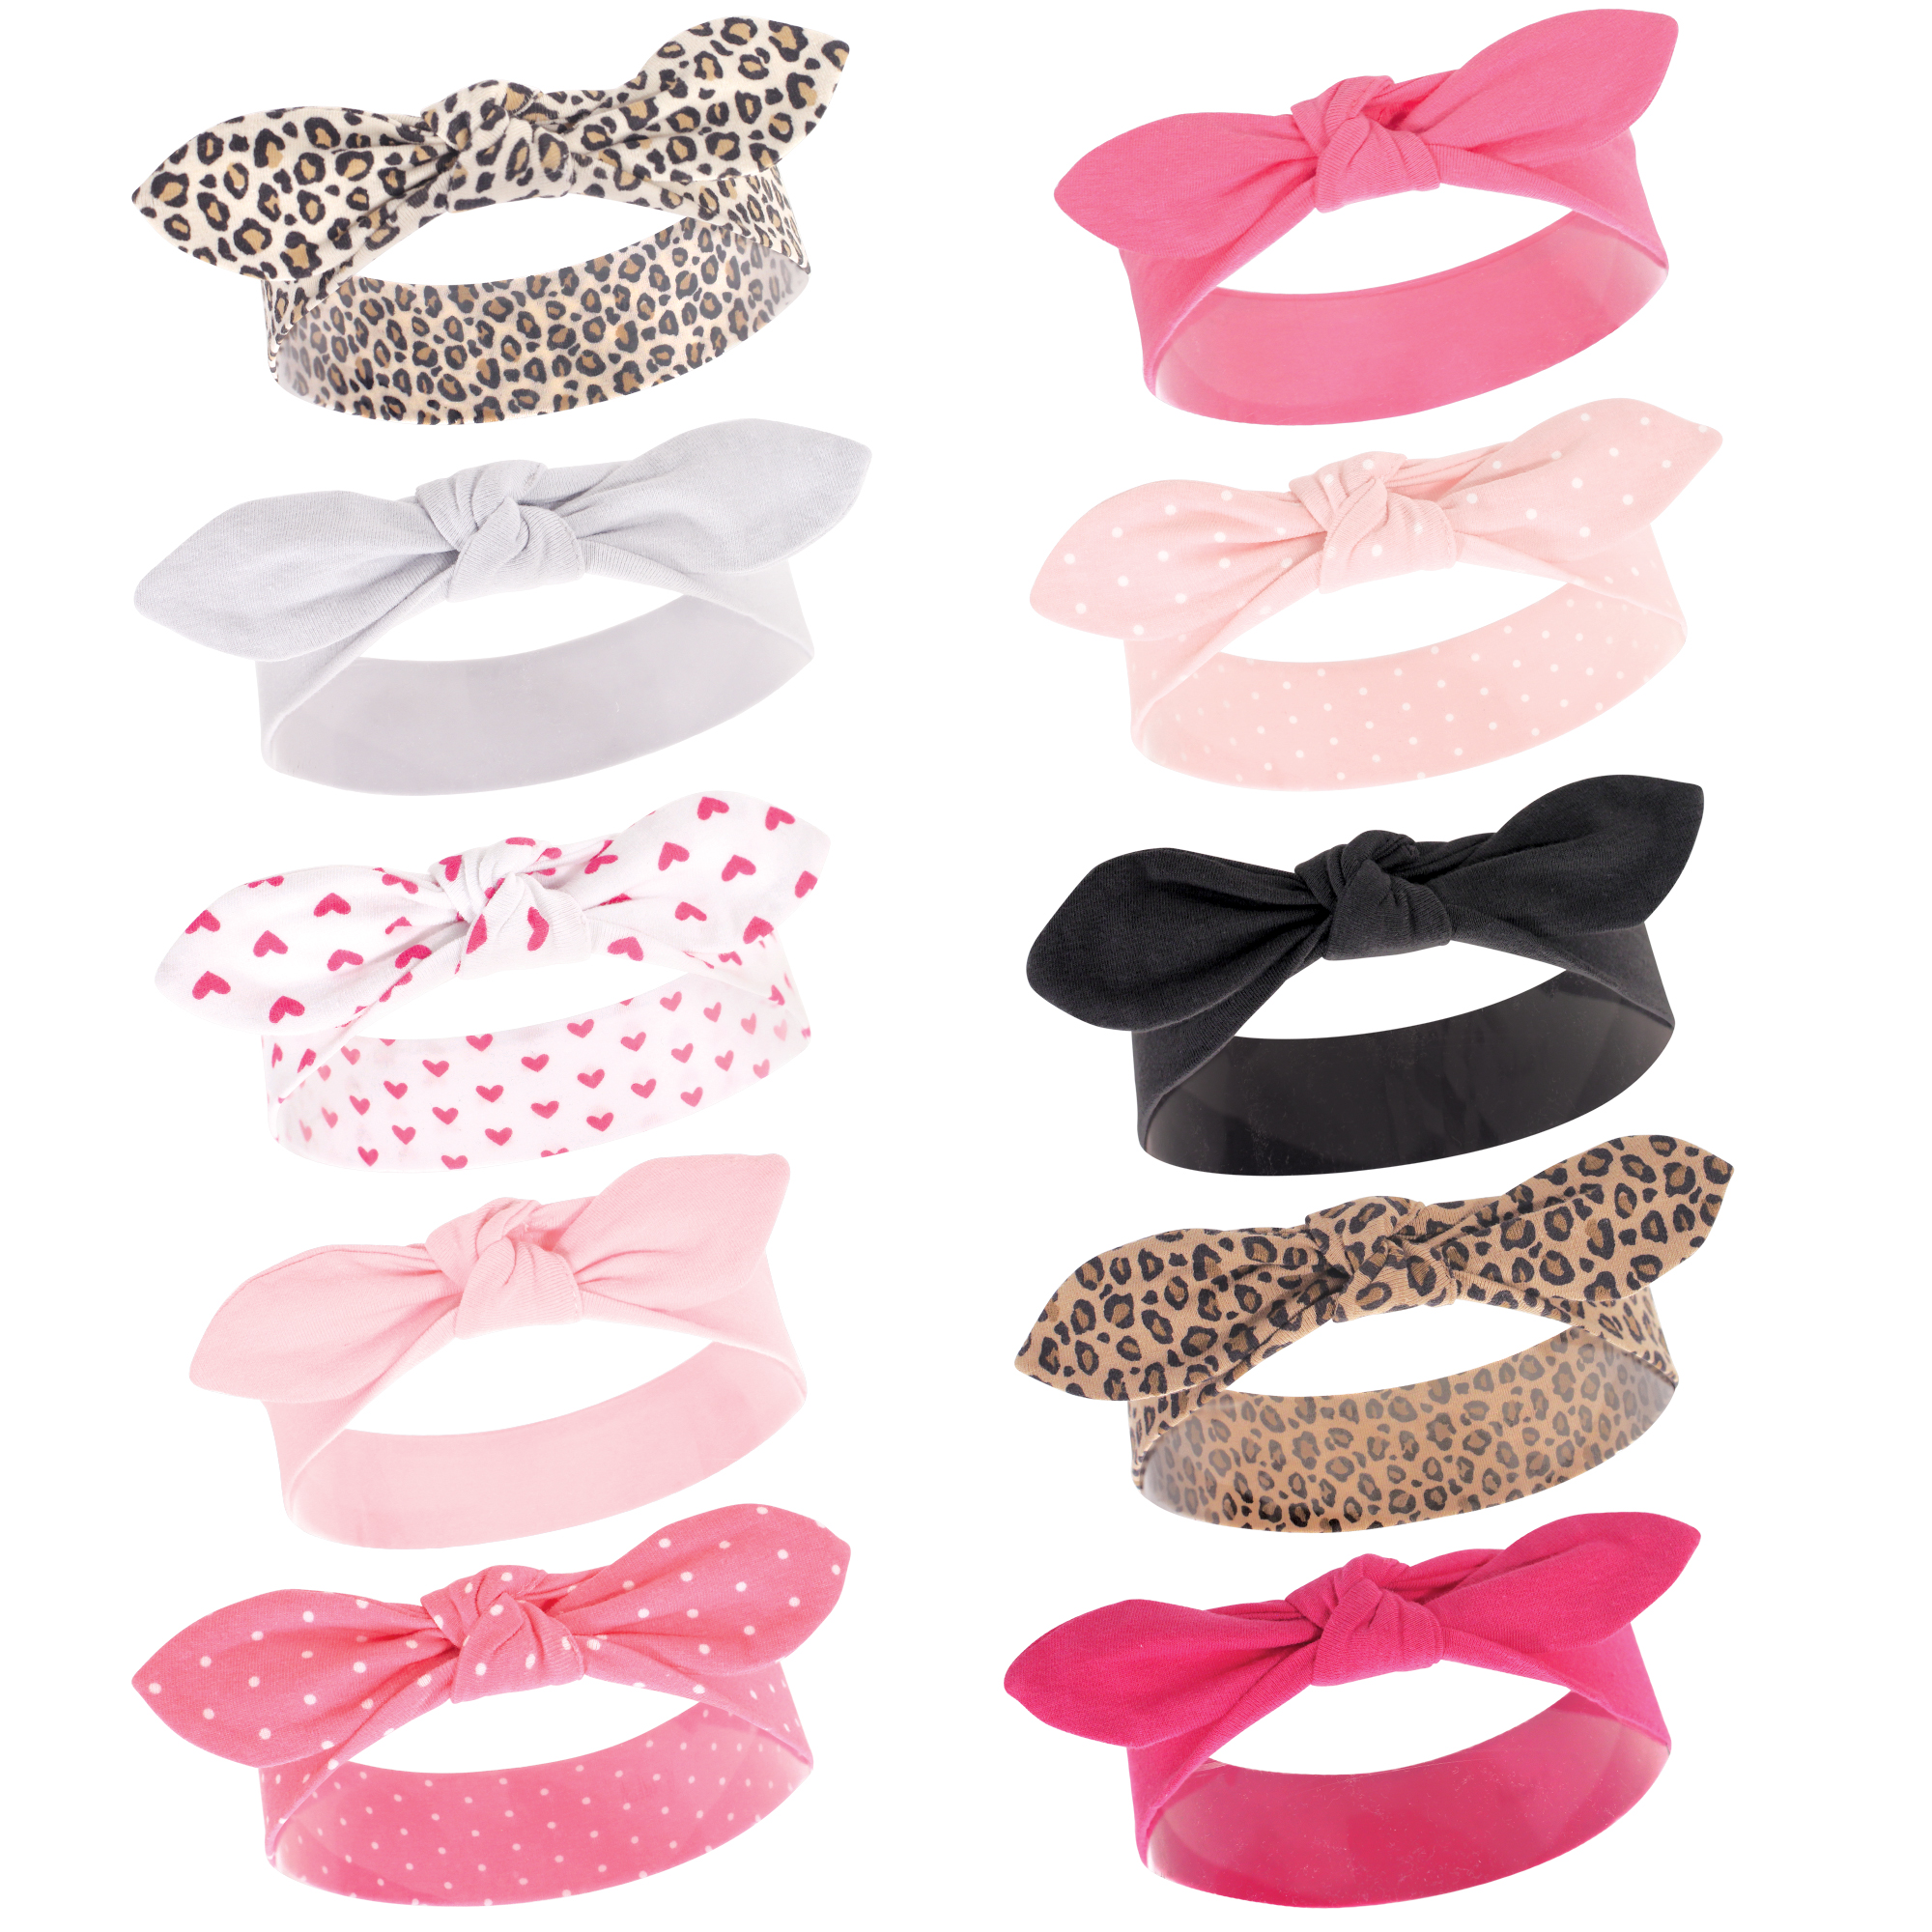 Hudson Baby Headbands 10-Pack, Leopard, One Size - Hudson Childrenswear